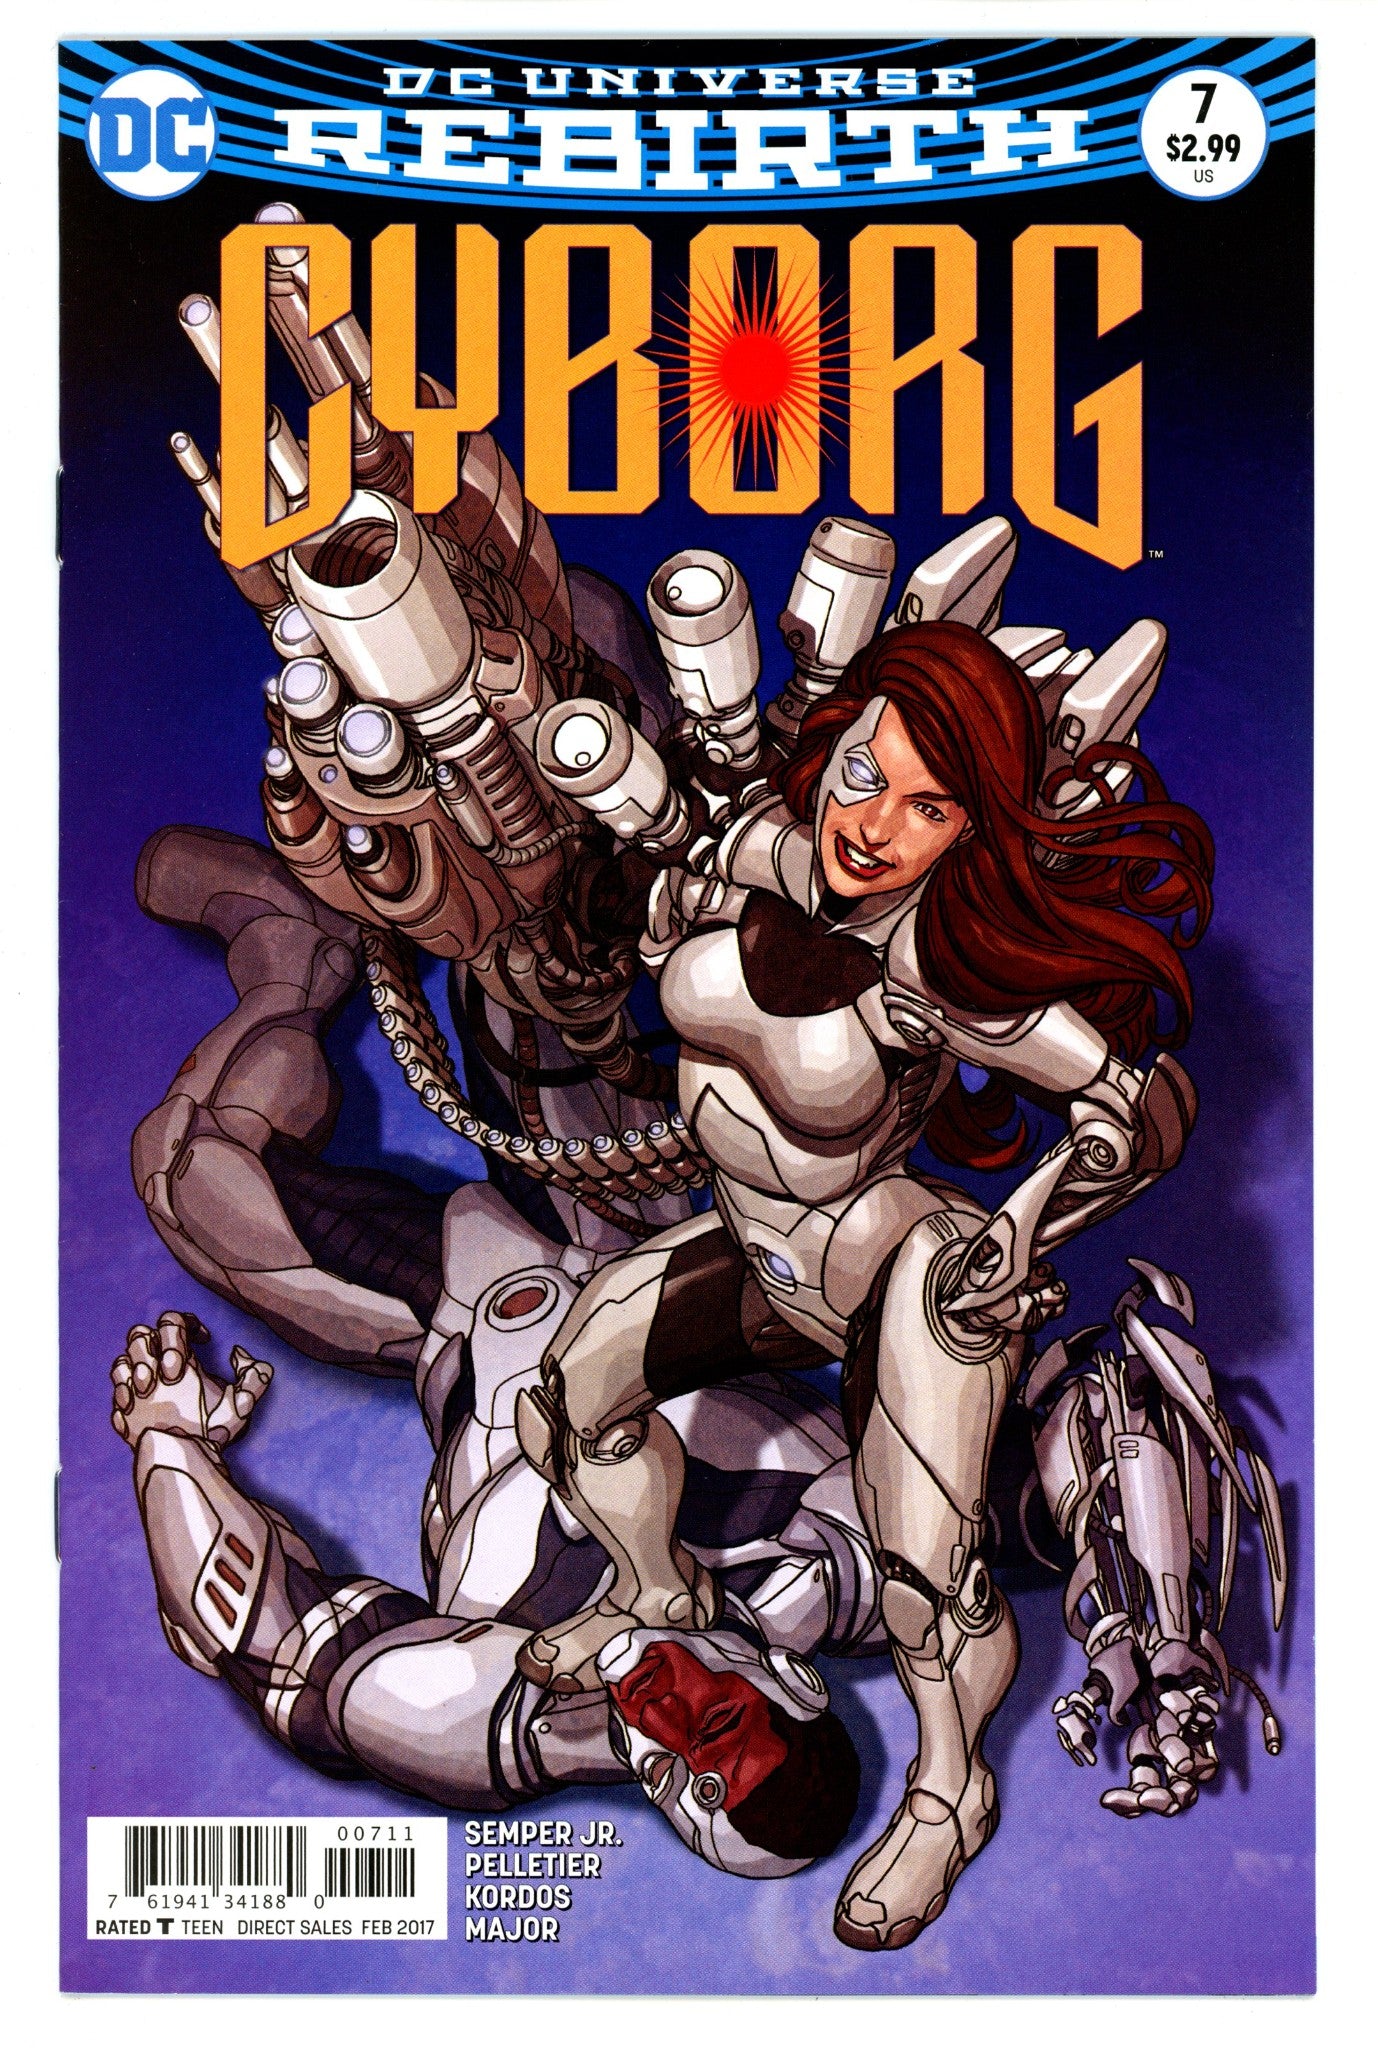 Cyborg Vol 2 7 High Grade (2017) 